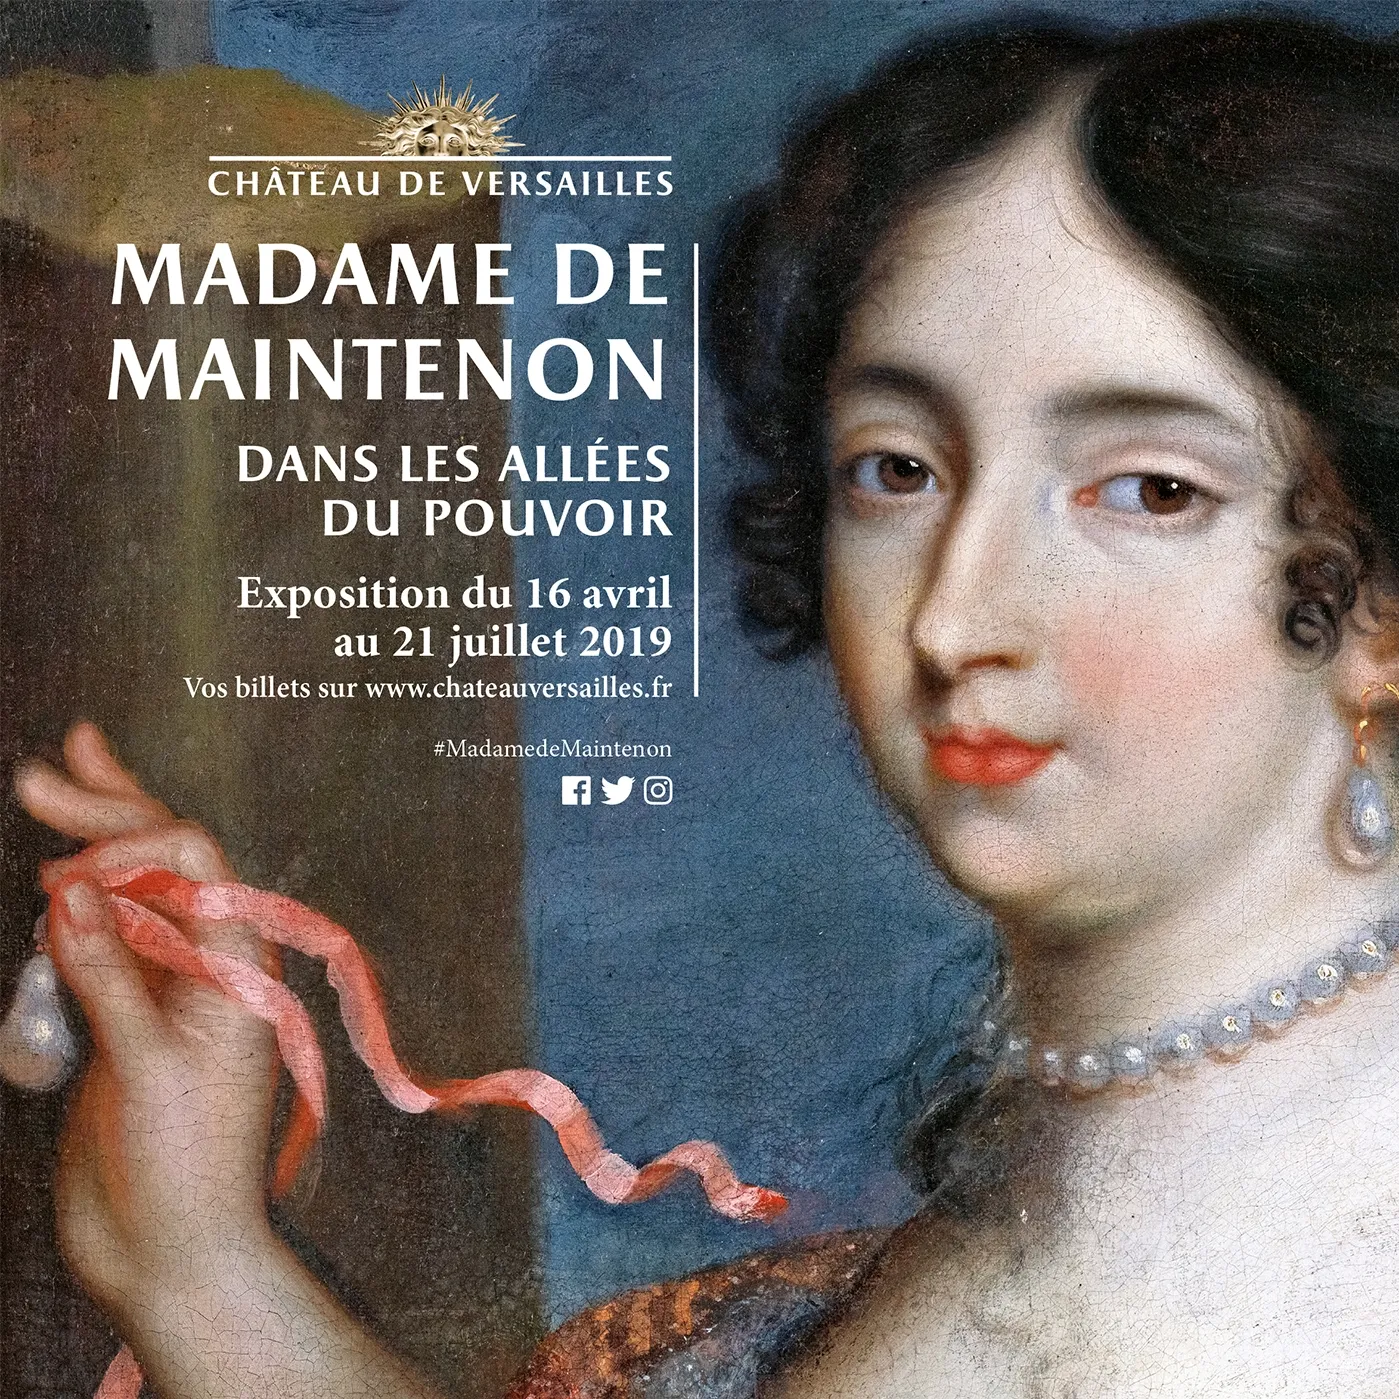 Мадам де Ментенон Версаль